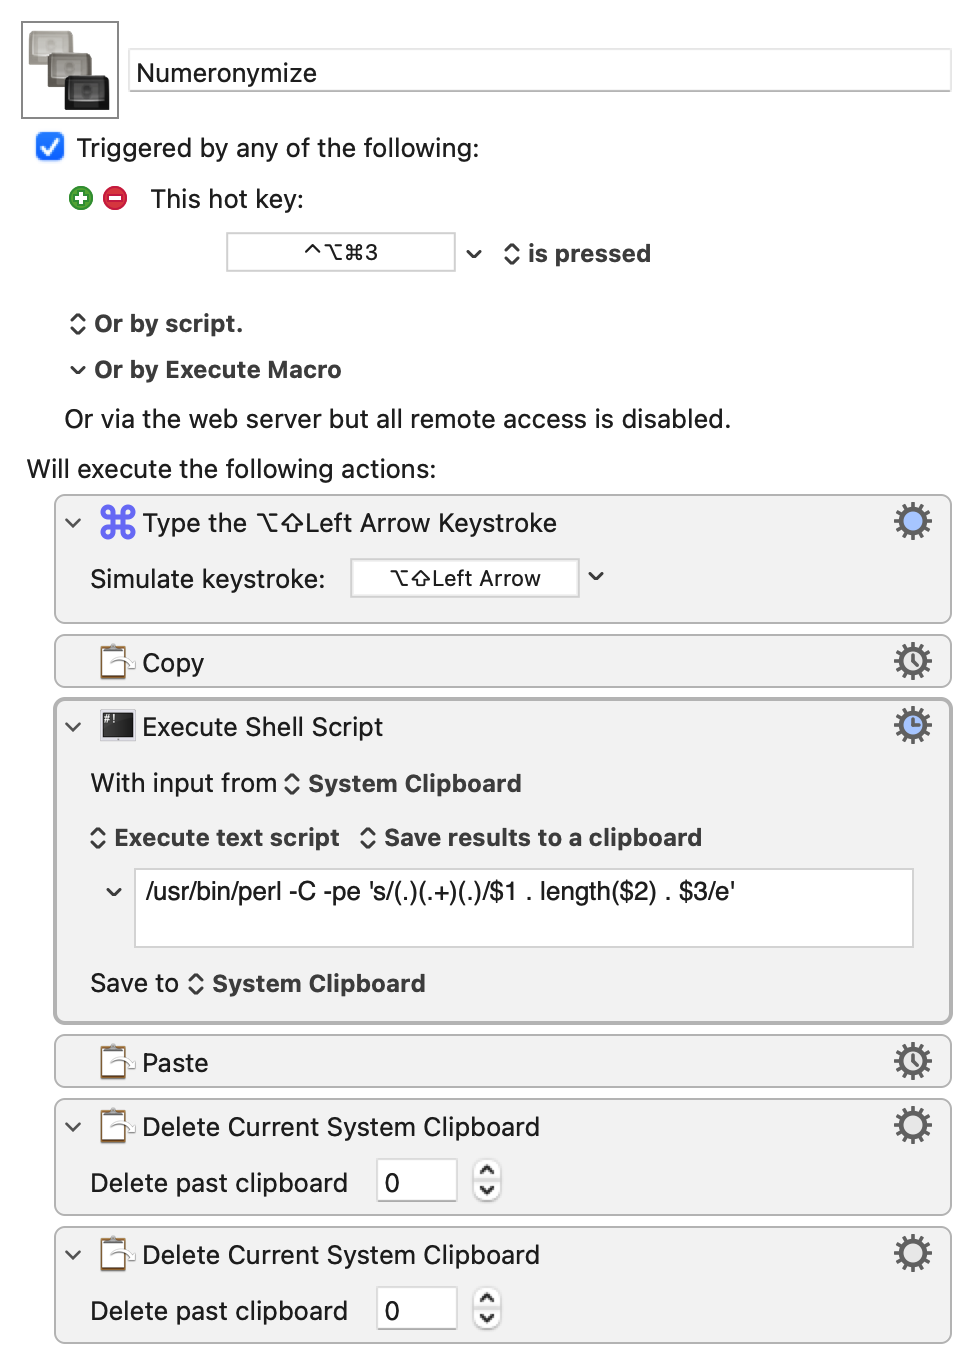 Screenshot of Keyboard Maestro Numeronymize macro